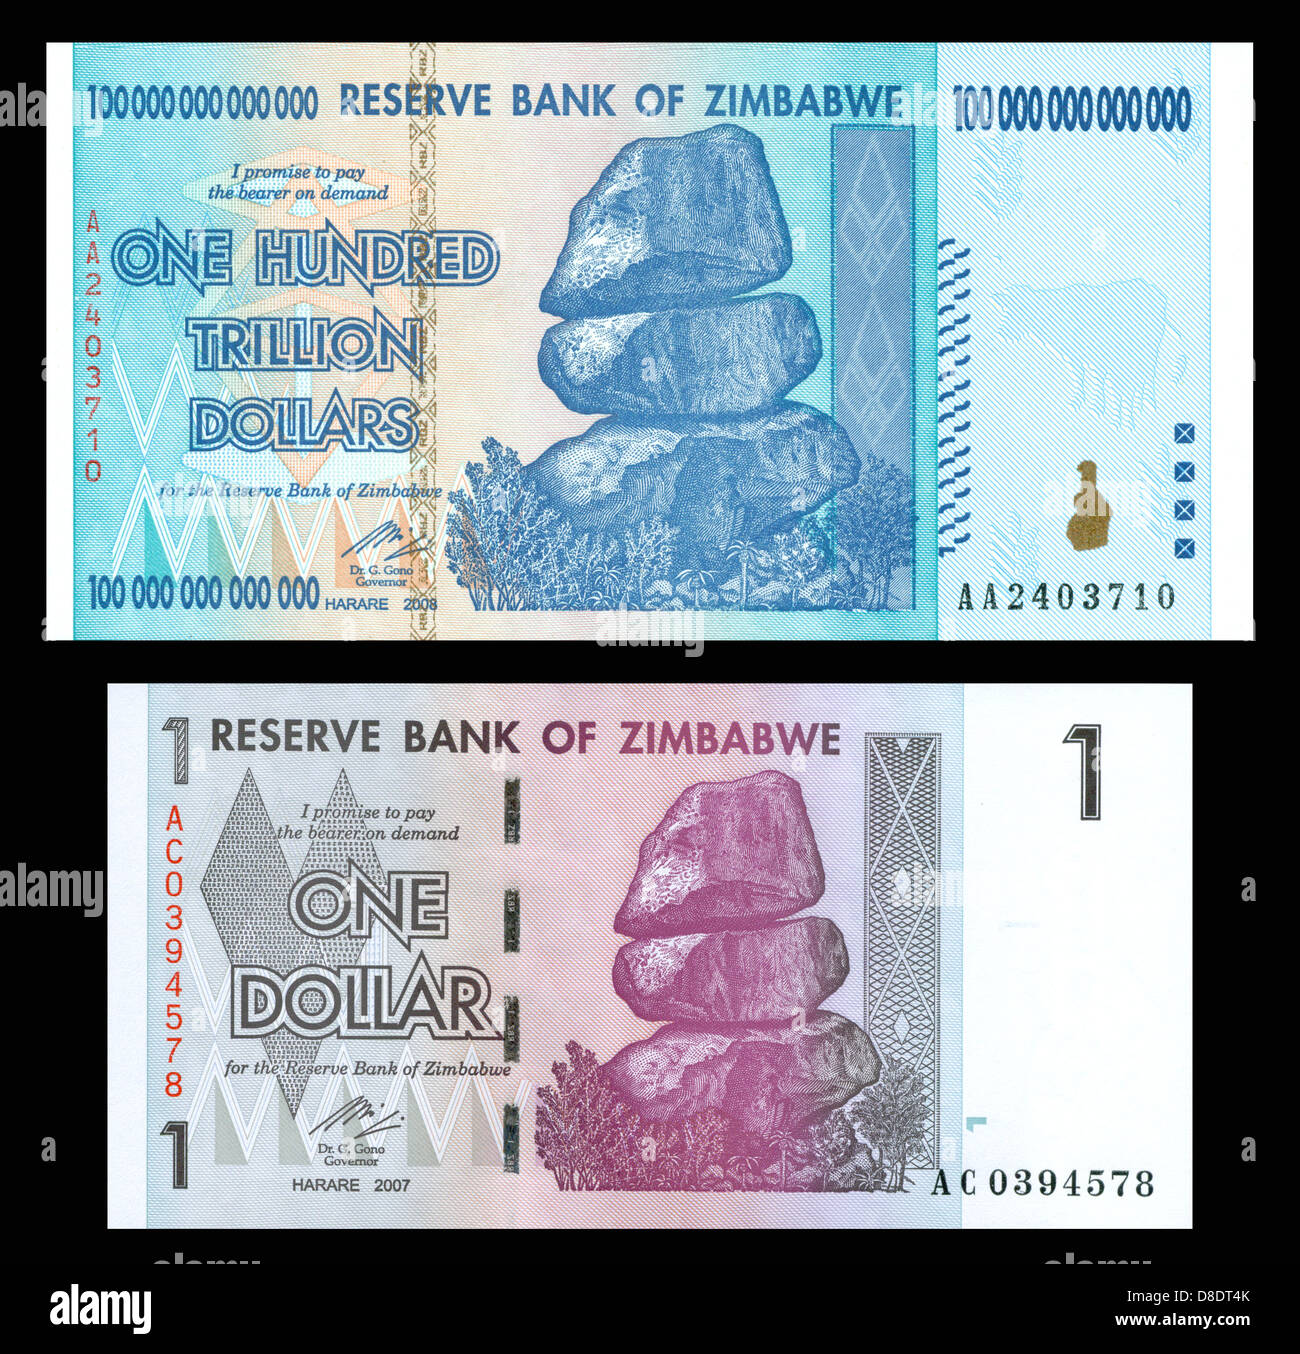 Inflación: Cien trillones de dólares de Zimbabwe nota bancaria junto a 1 dólar nota de igual valor. Foto de stock